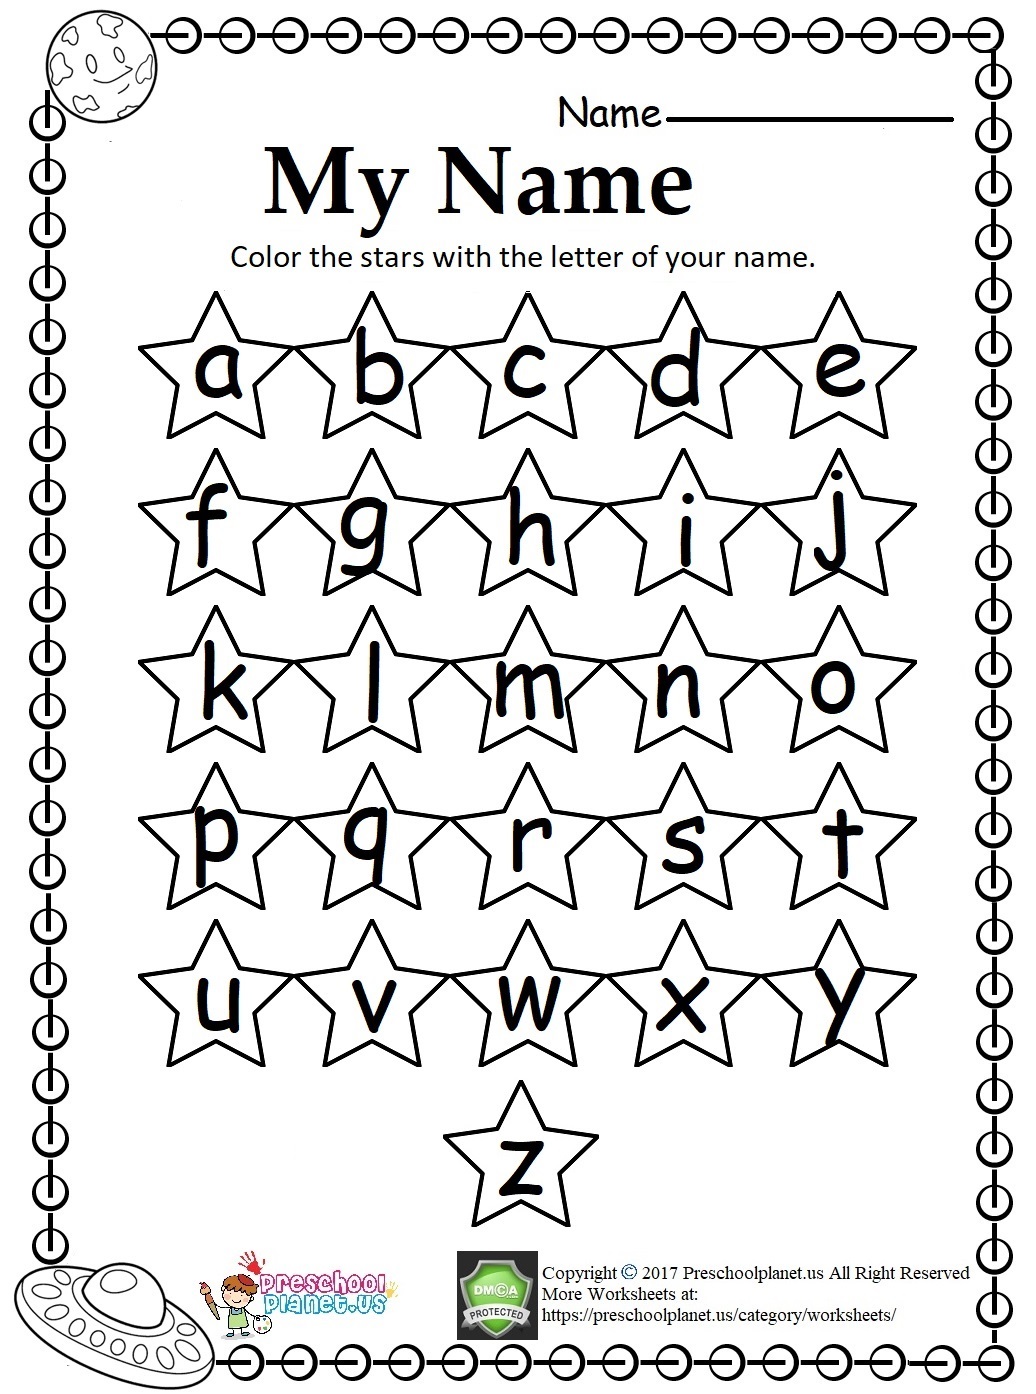 Writing My Name Worksheet teachs little kids how to write ...